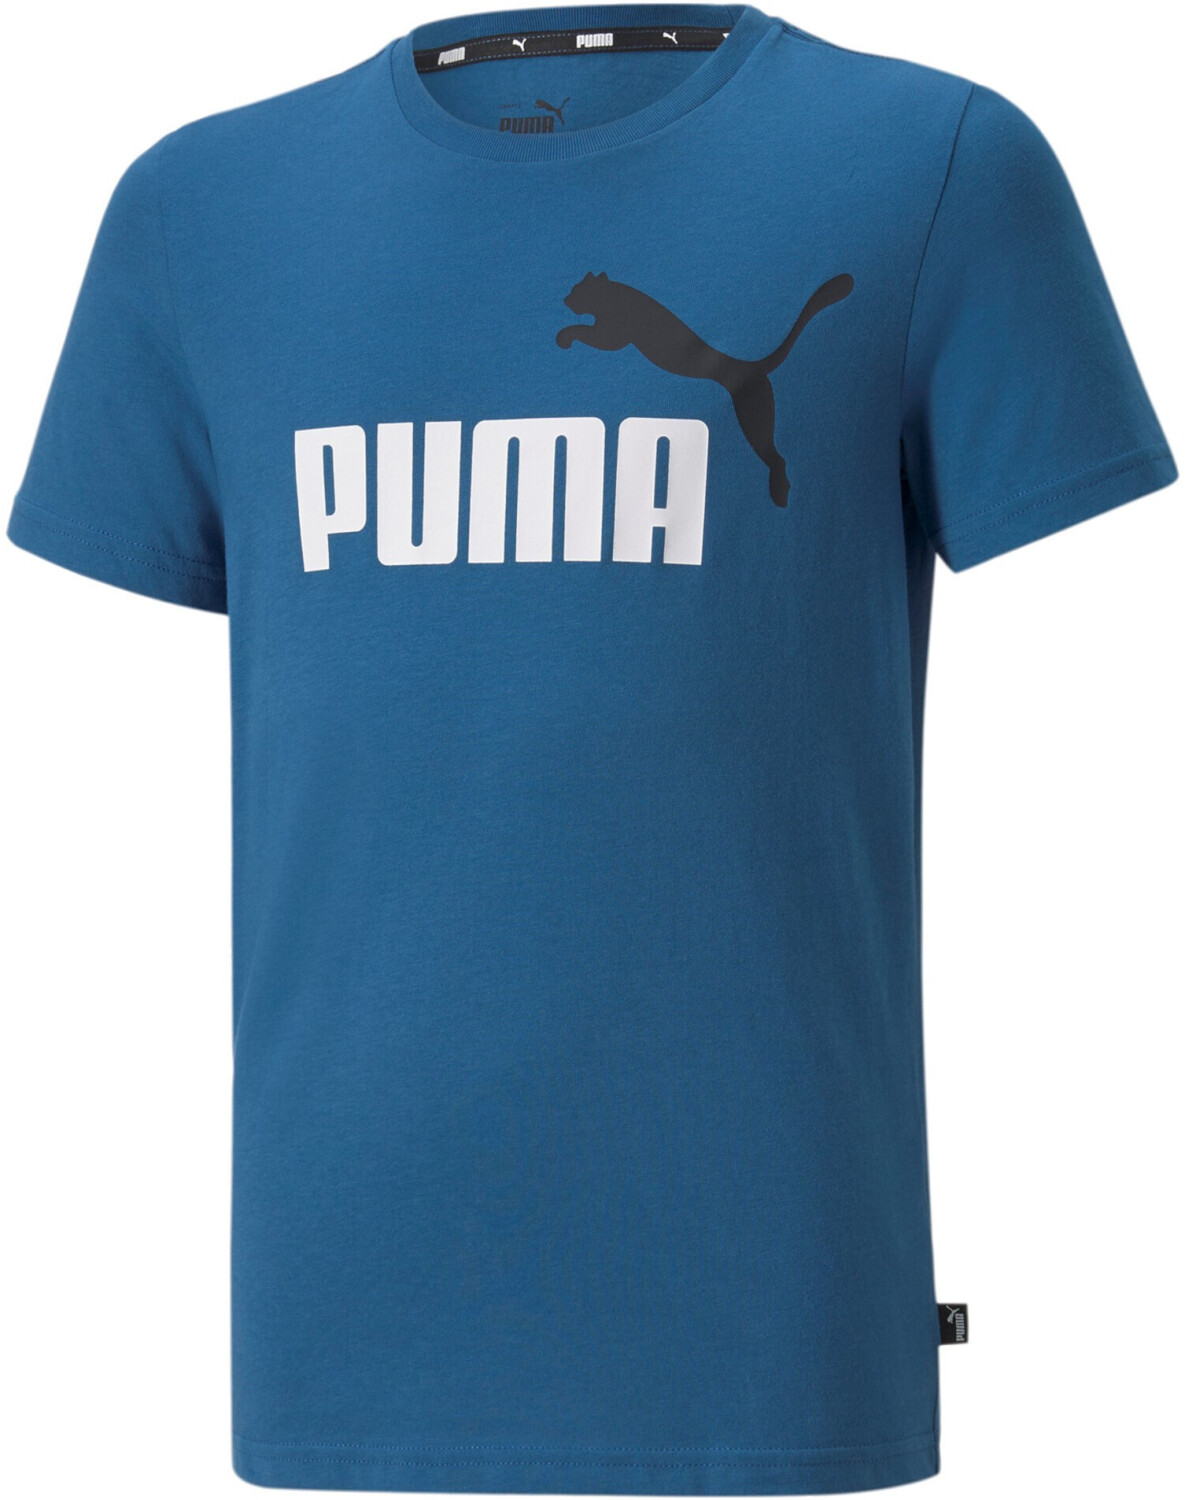 Puma Kinder T-Shirt 2 € bei Col blue Logo lake (586985-17) ab Preisvergleich 17,20 ESS+ Tee 